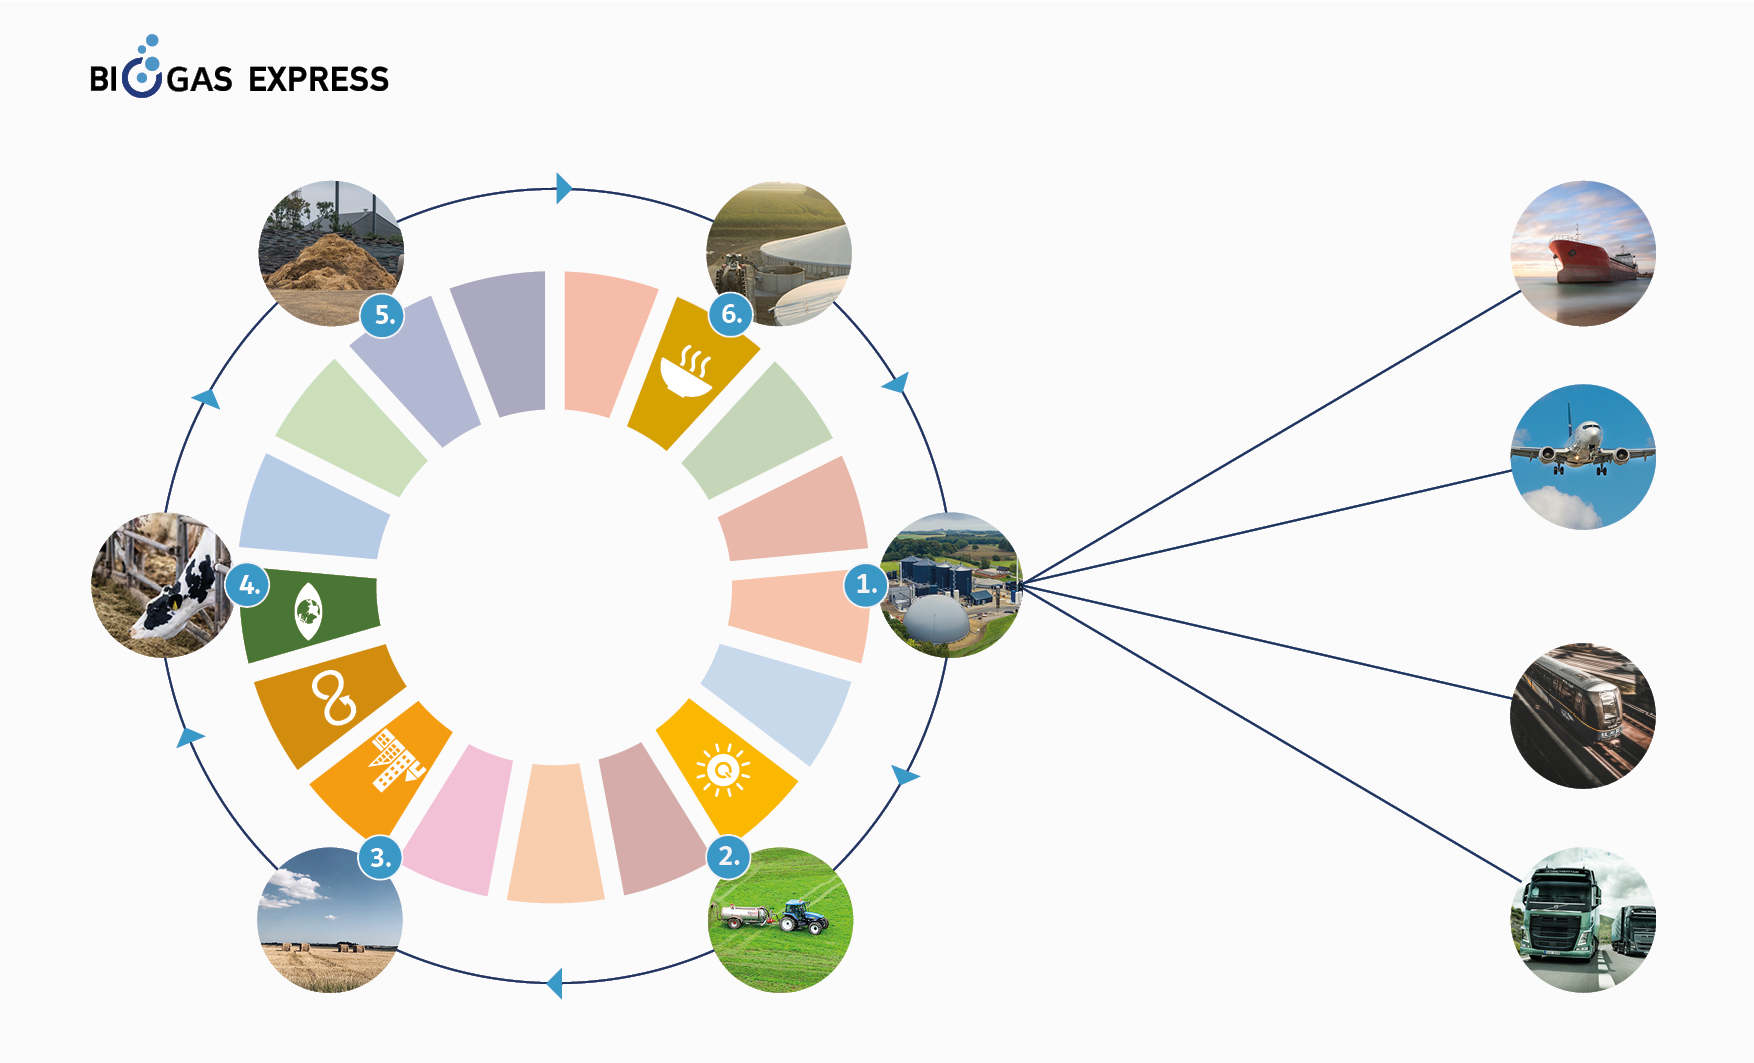 Hvordan fungerer biogas egentlig som cirkulær økonomi?